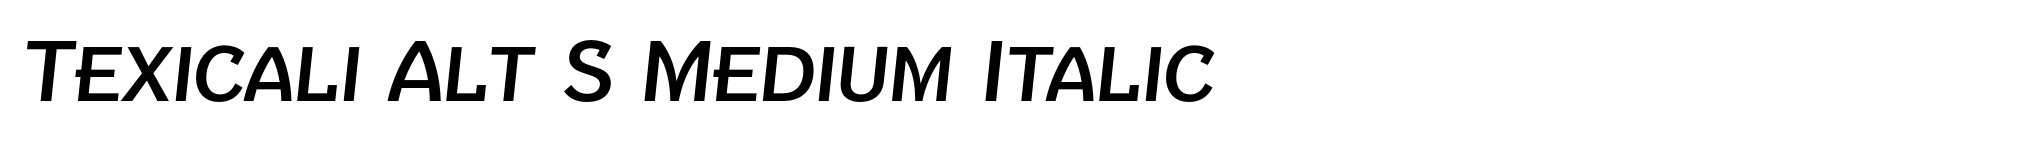 Texicali Alt S Medium Italic image